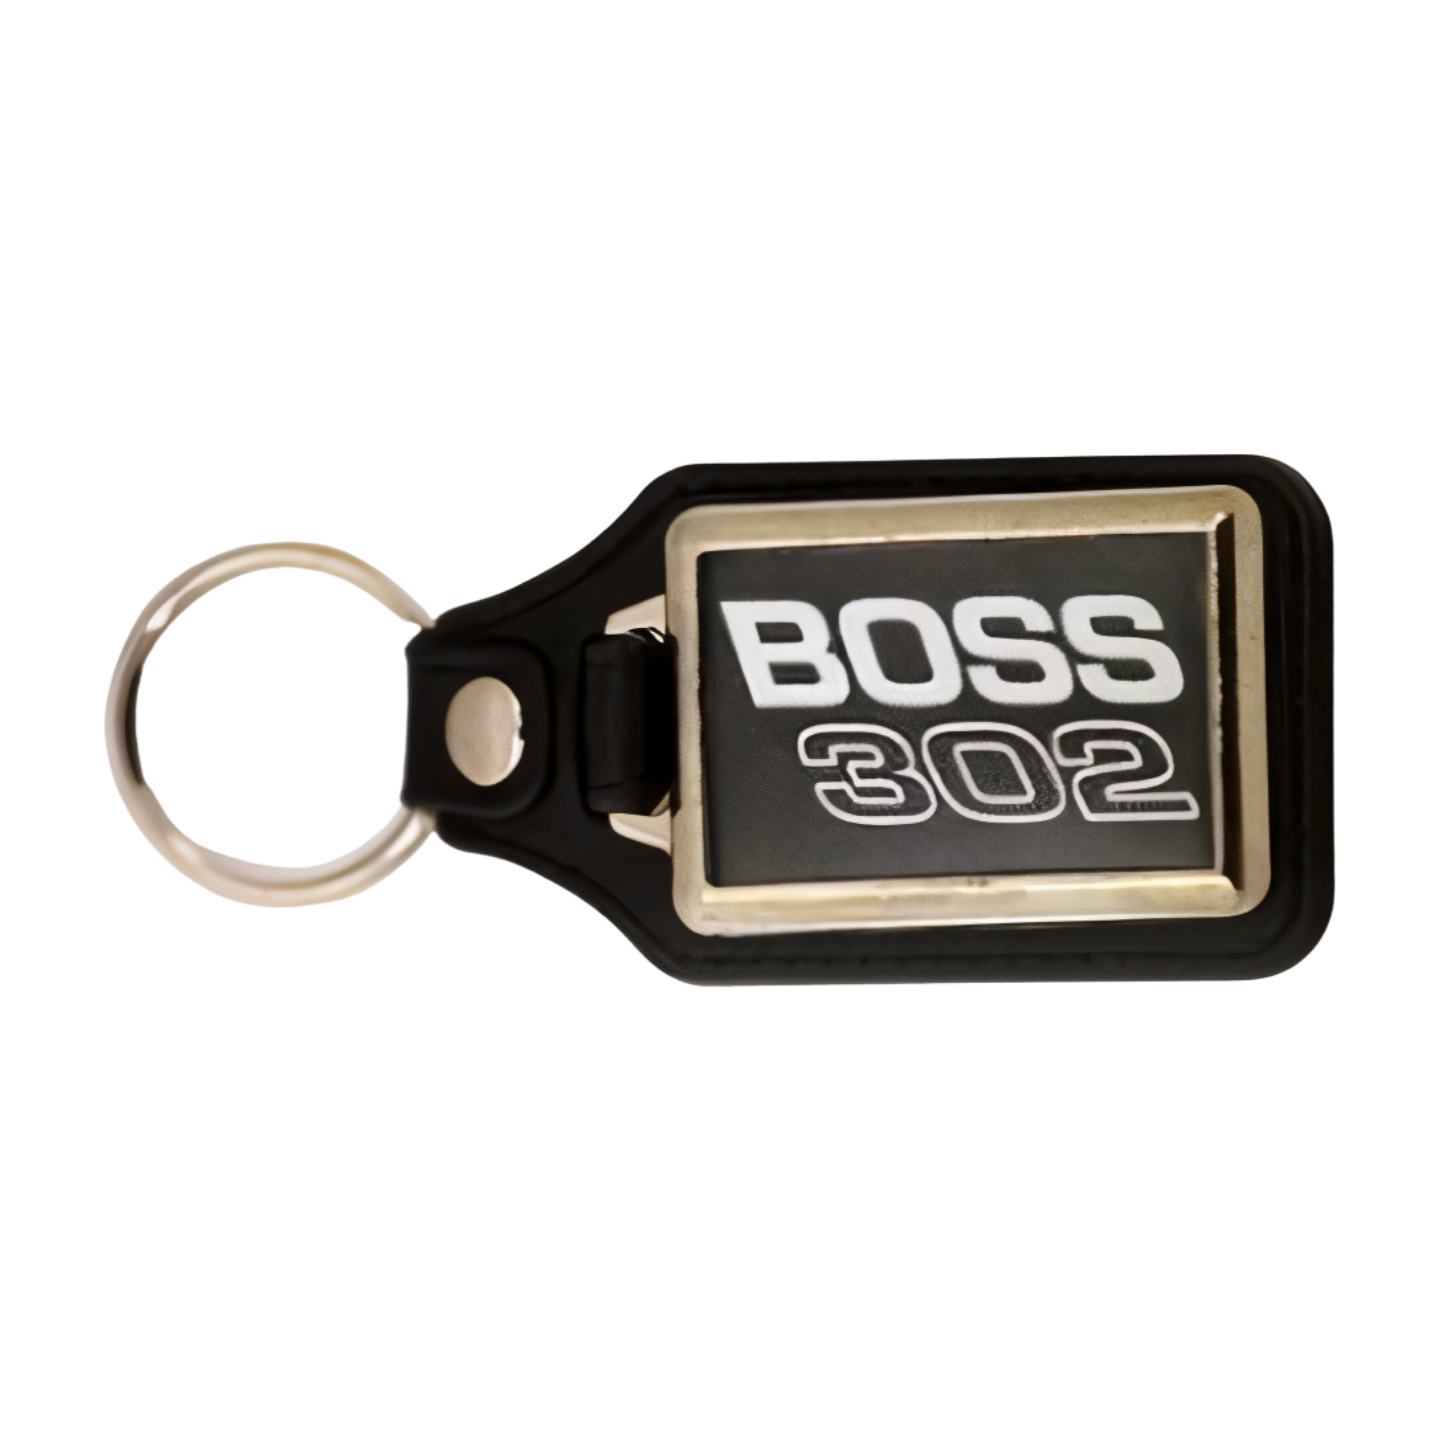 Boss 302 Keychain